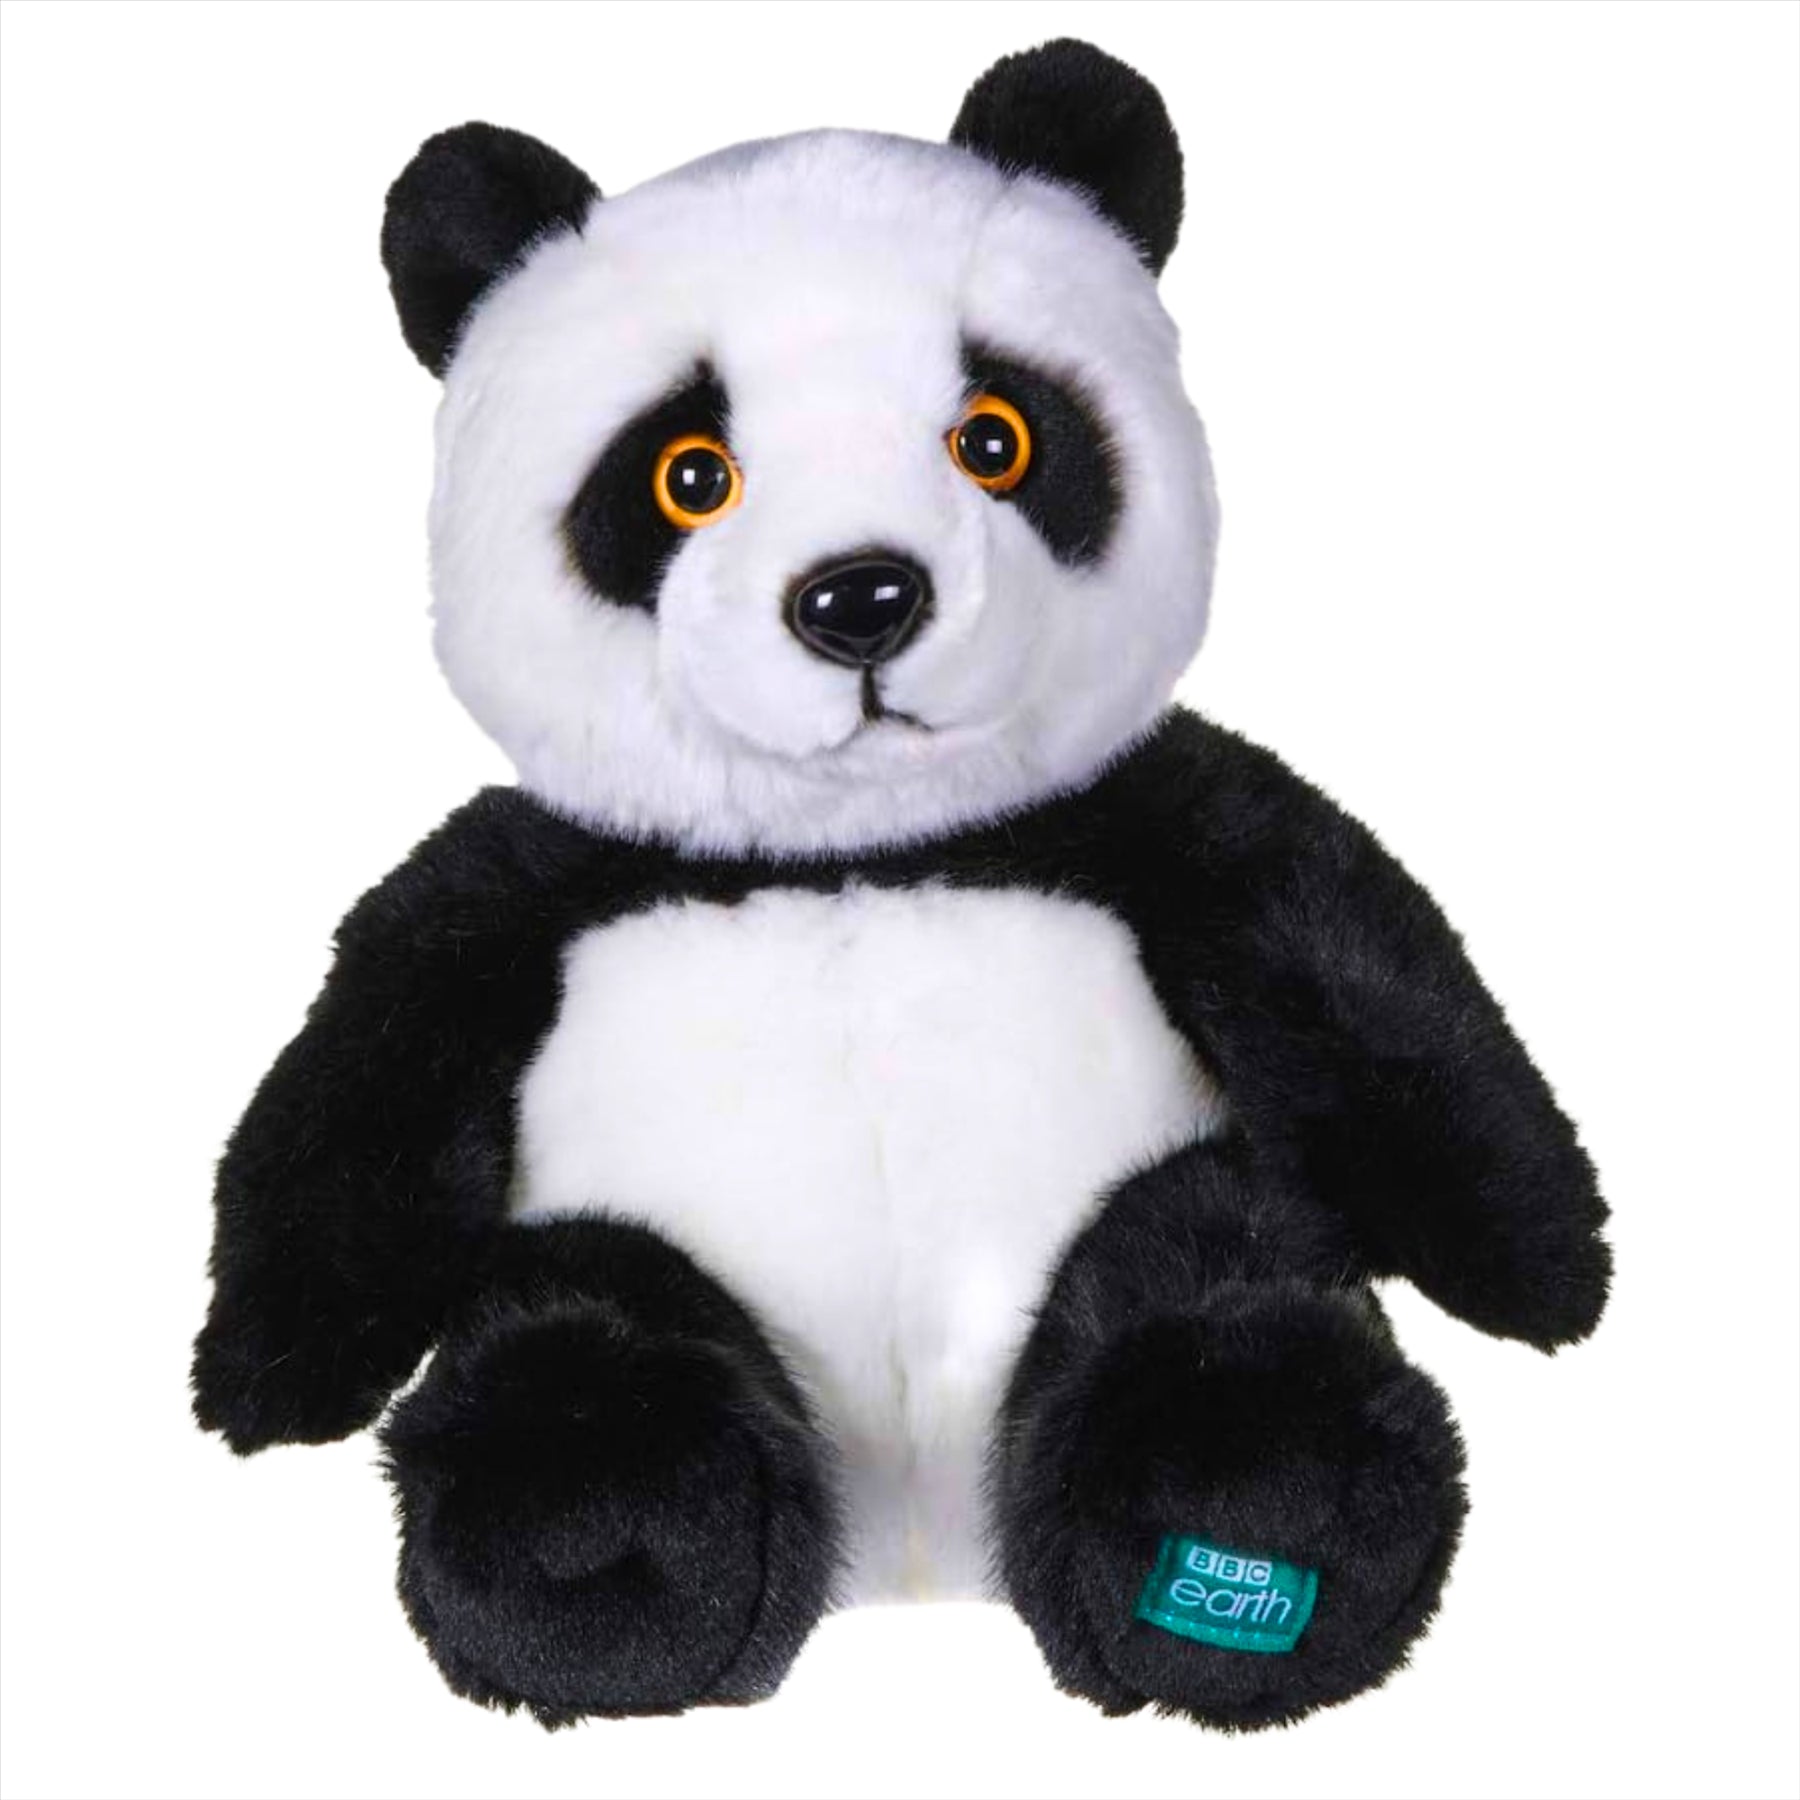 Posh Paws Planet Earth 2 Collection Panda Super Soft Plush Toy 25cm 10"